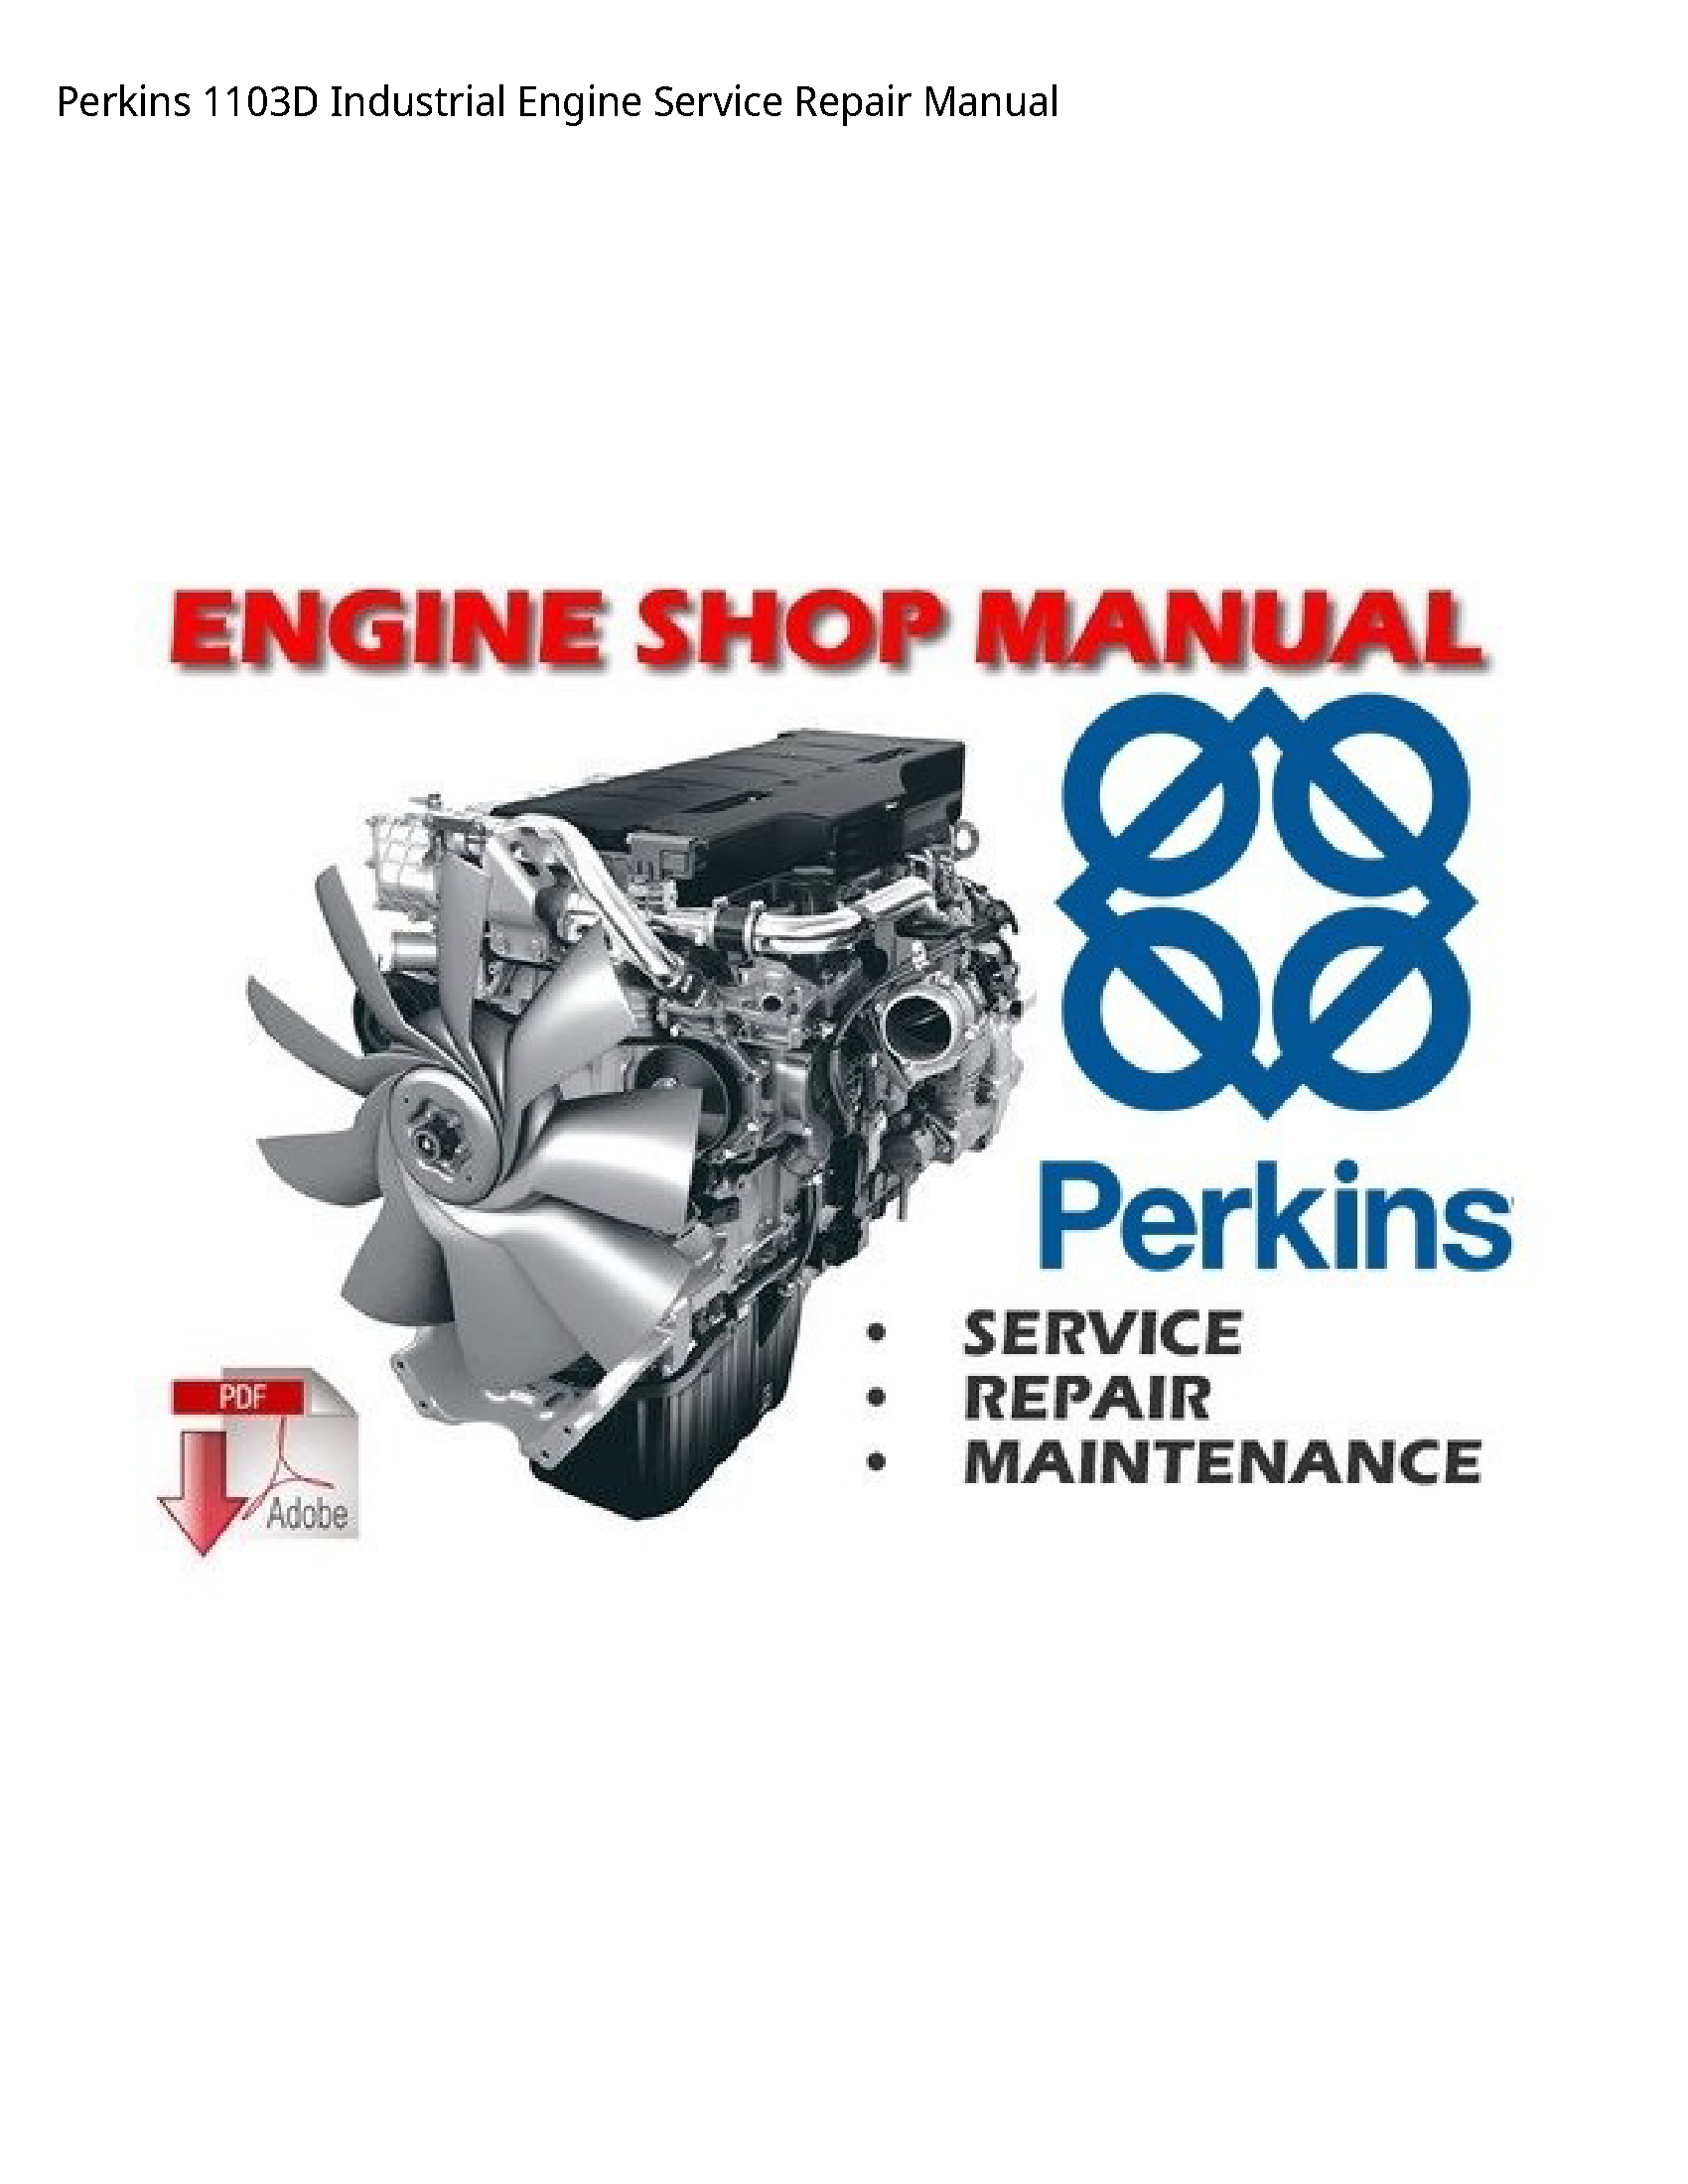 Perkins 1103D Industrial Engine manual